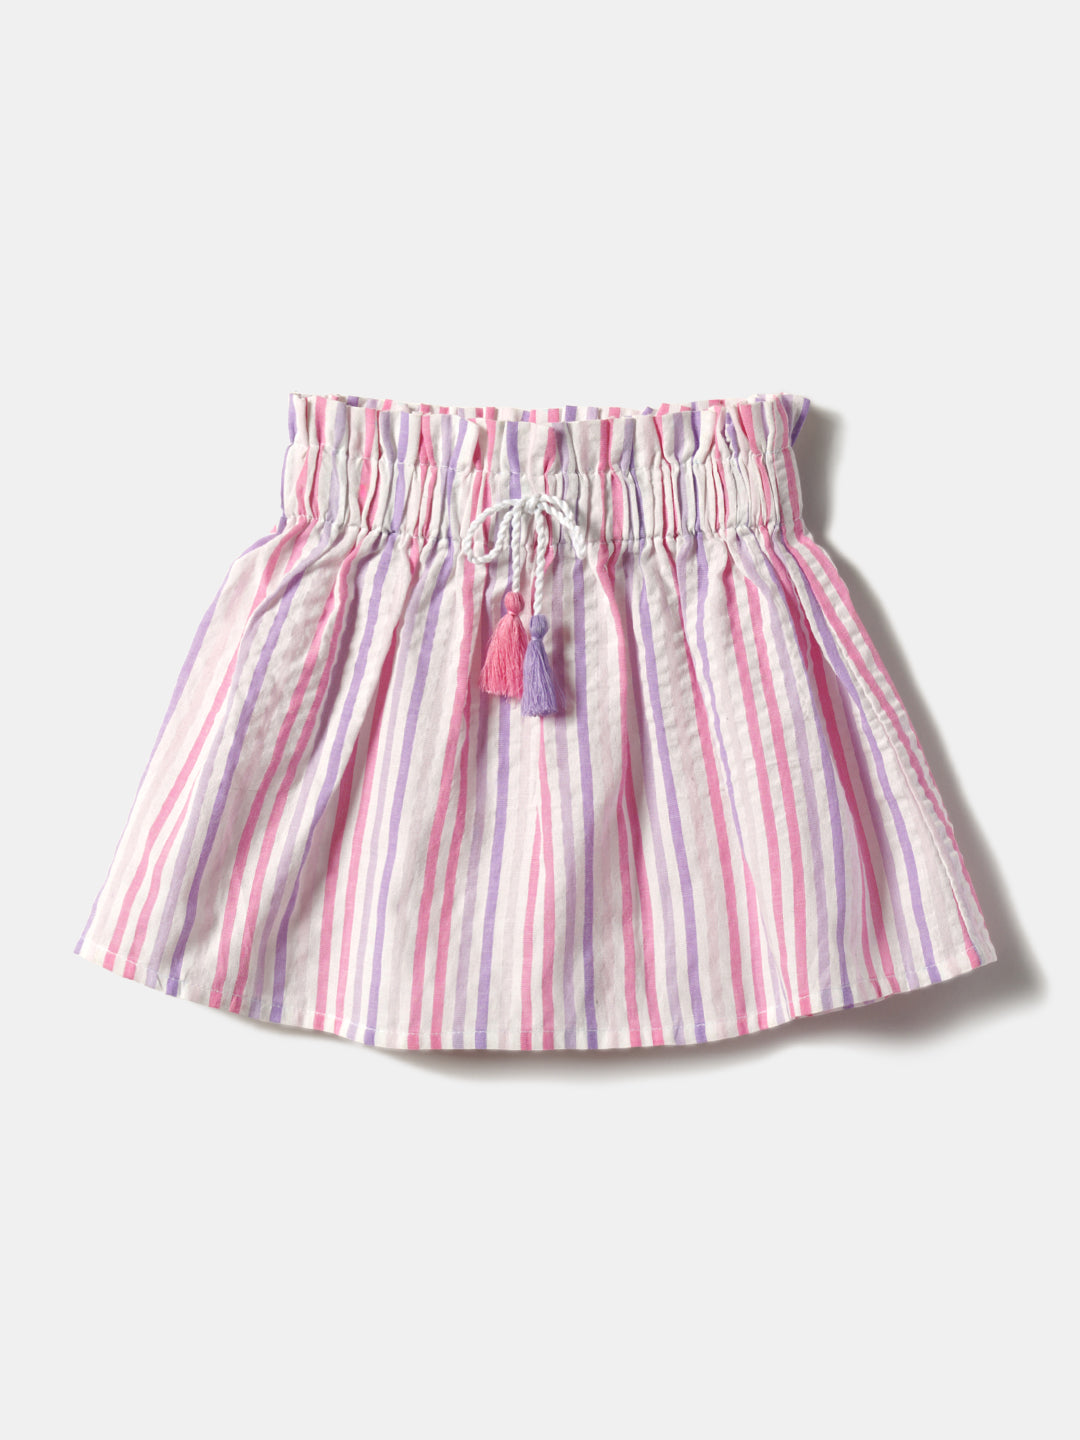 Nautinati Girls Stripes Sleeveless One Shoulder Top & Skirt Set